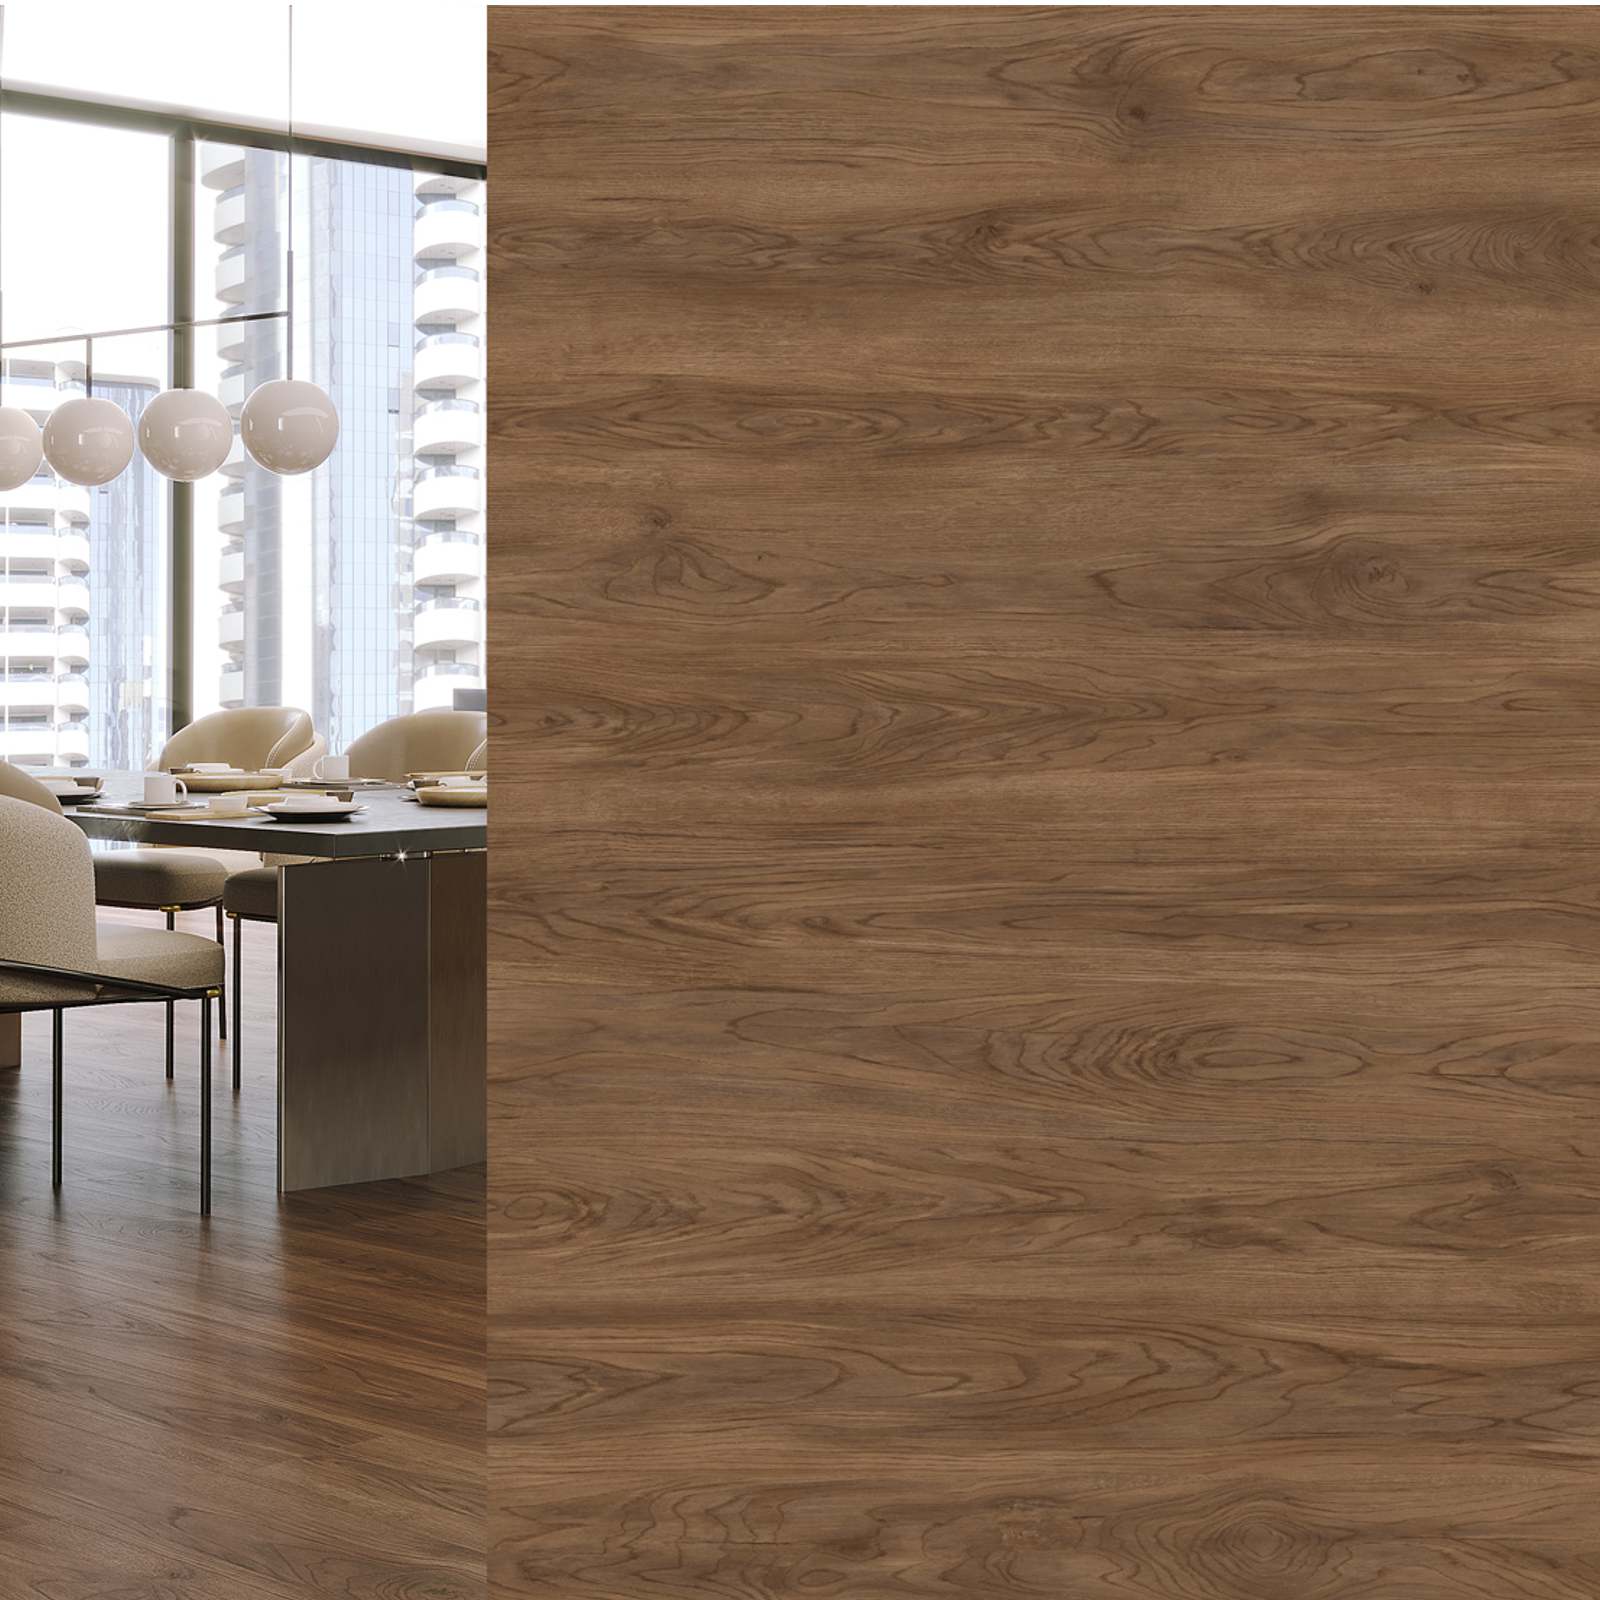 COREPEL Wood Edition Oversize Crystal Oak Brown 4554 - 2,25 m²